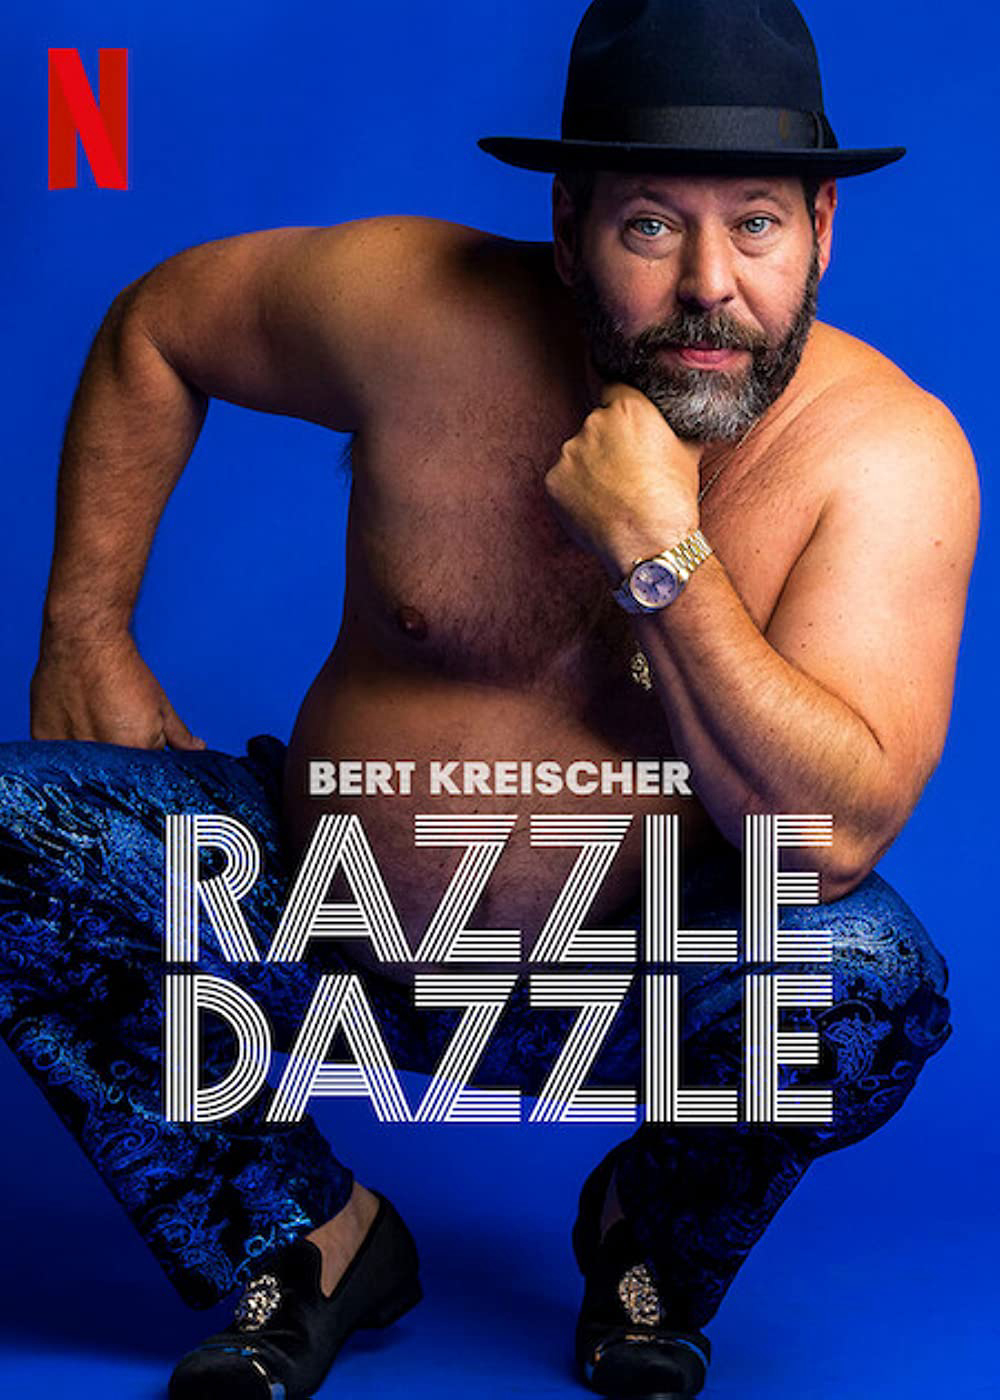 Poster Phim Bert Kreischer: Huyên náo (Bert Kreischer: Razzle Dazzle)